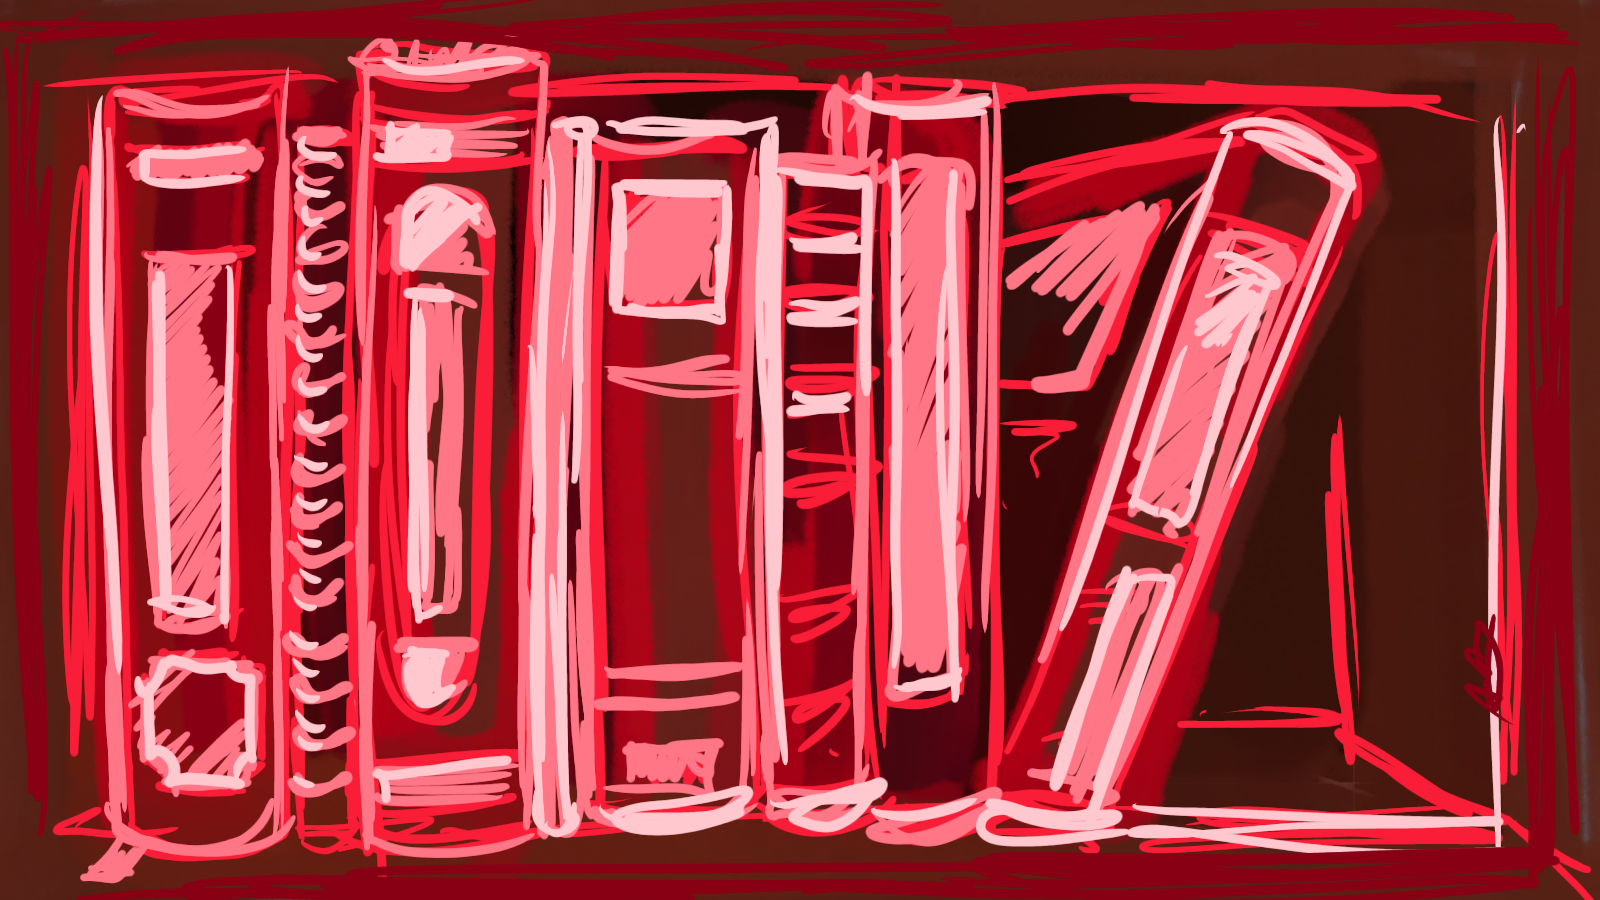 An illustration of a red bookshelf.